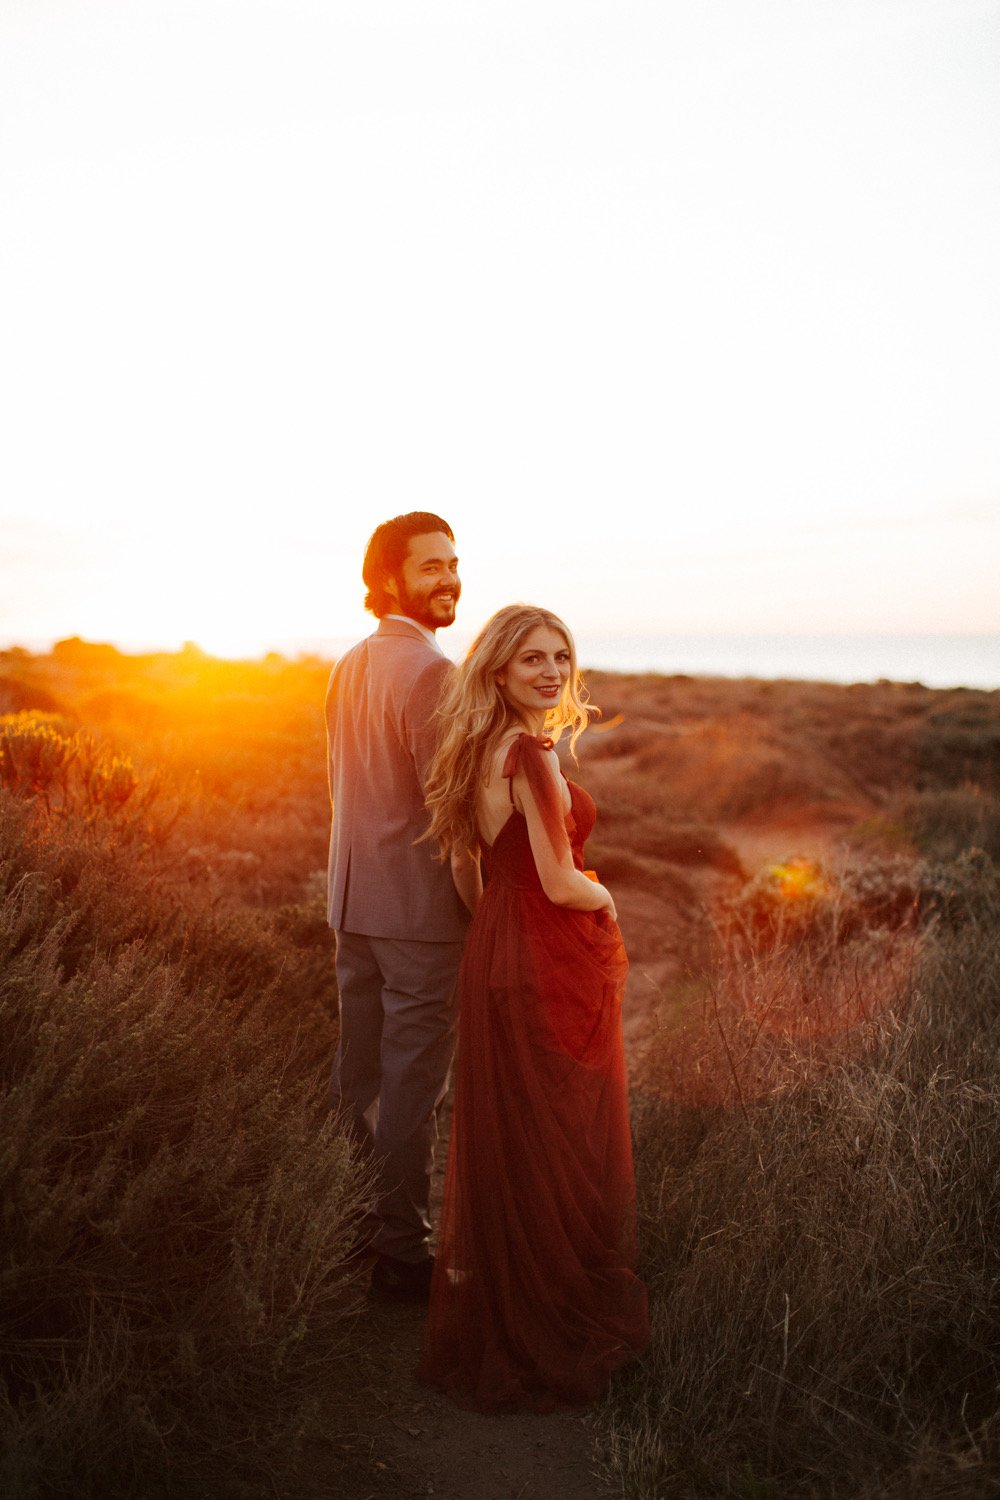 montana de oro sunset engagement photos central coast california wedding photographer poppy and vine (5).jpg